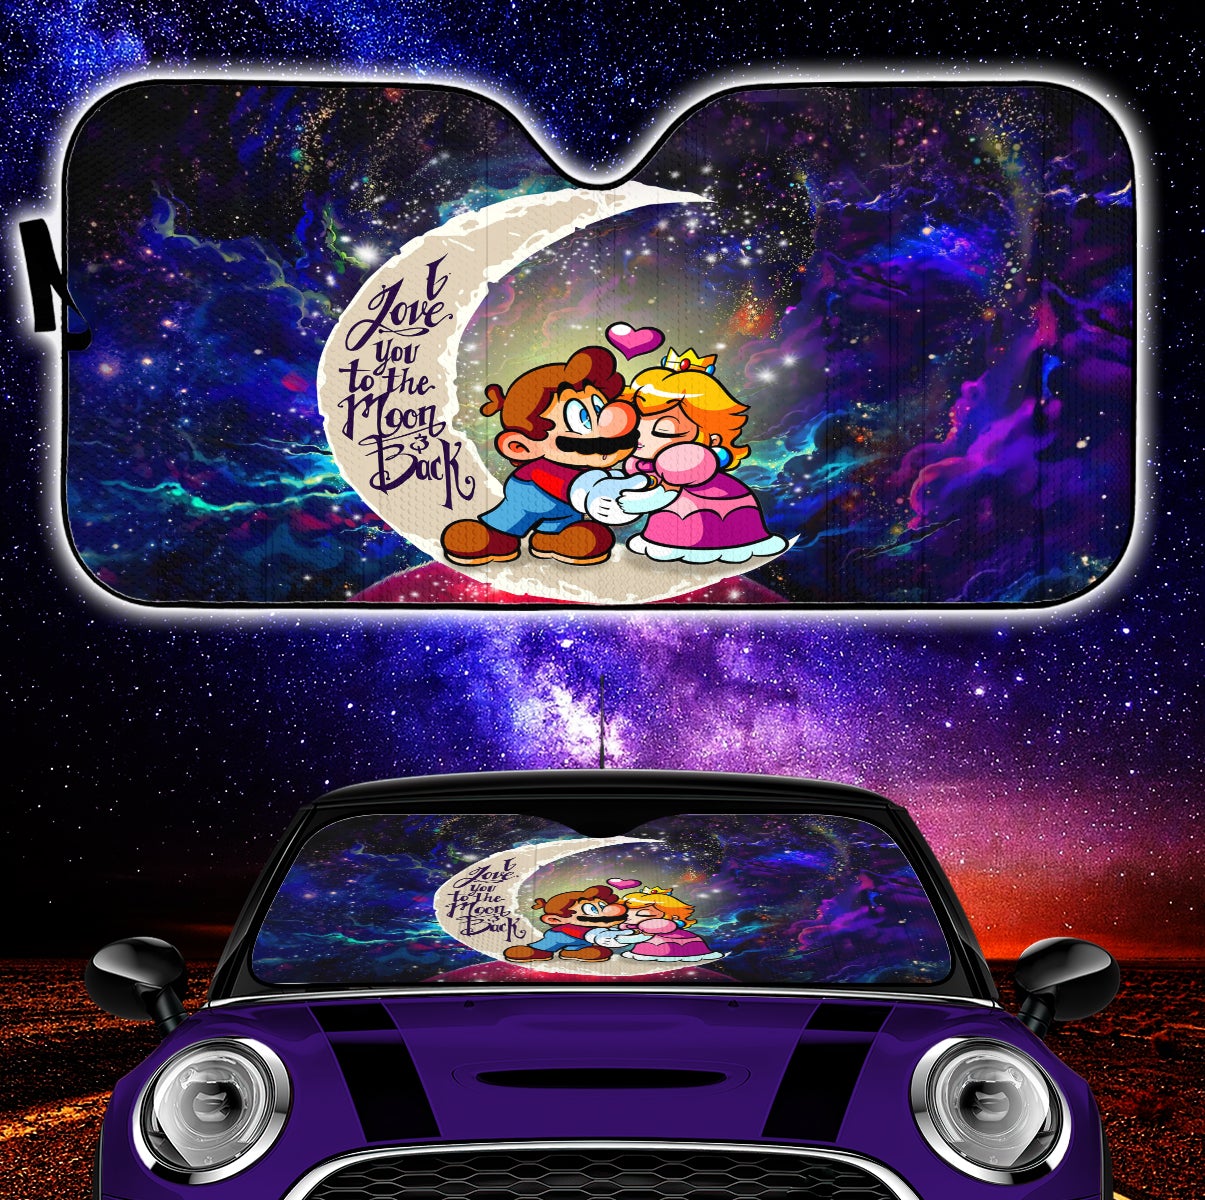 Mario Couple Love You To The Moon Galaxy Car Auto Sunshades